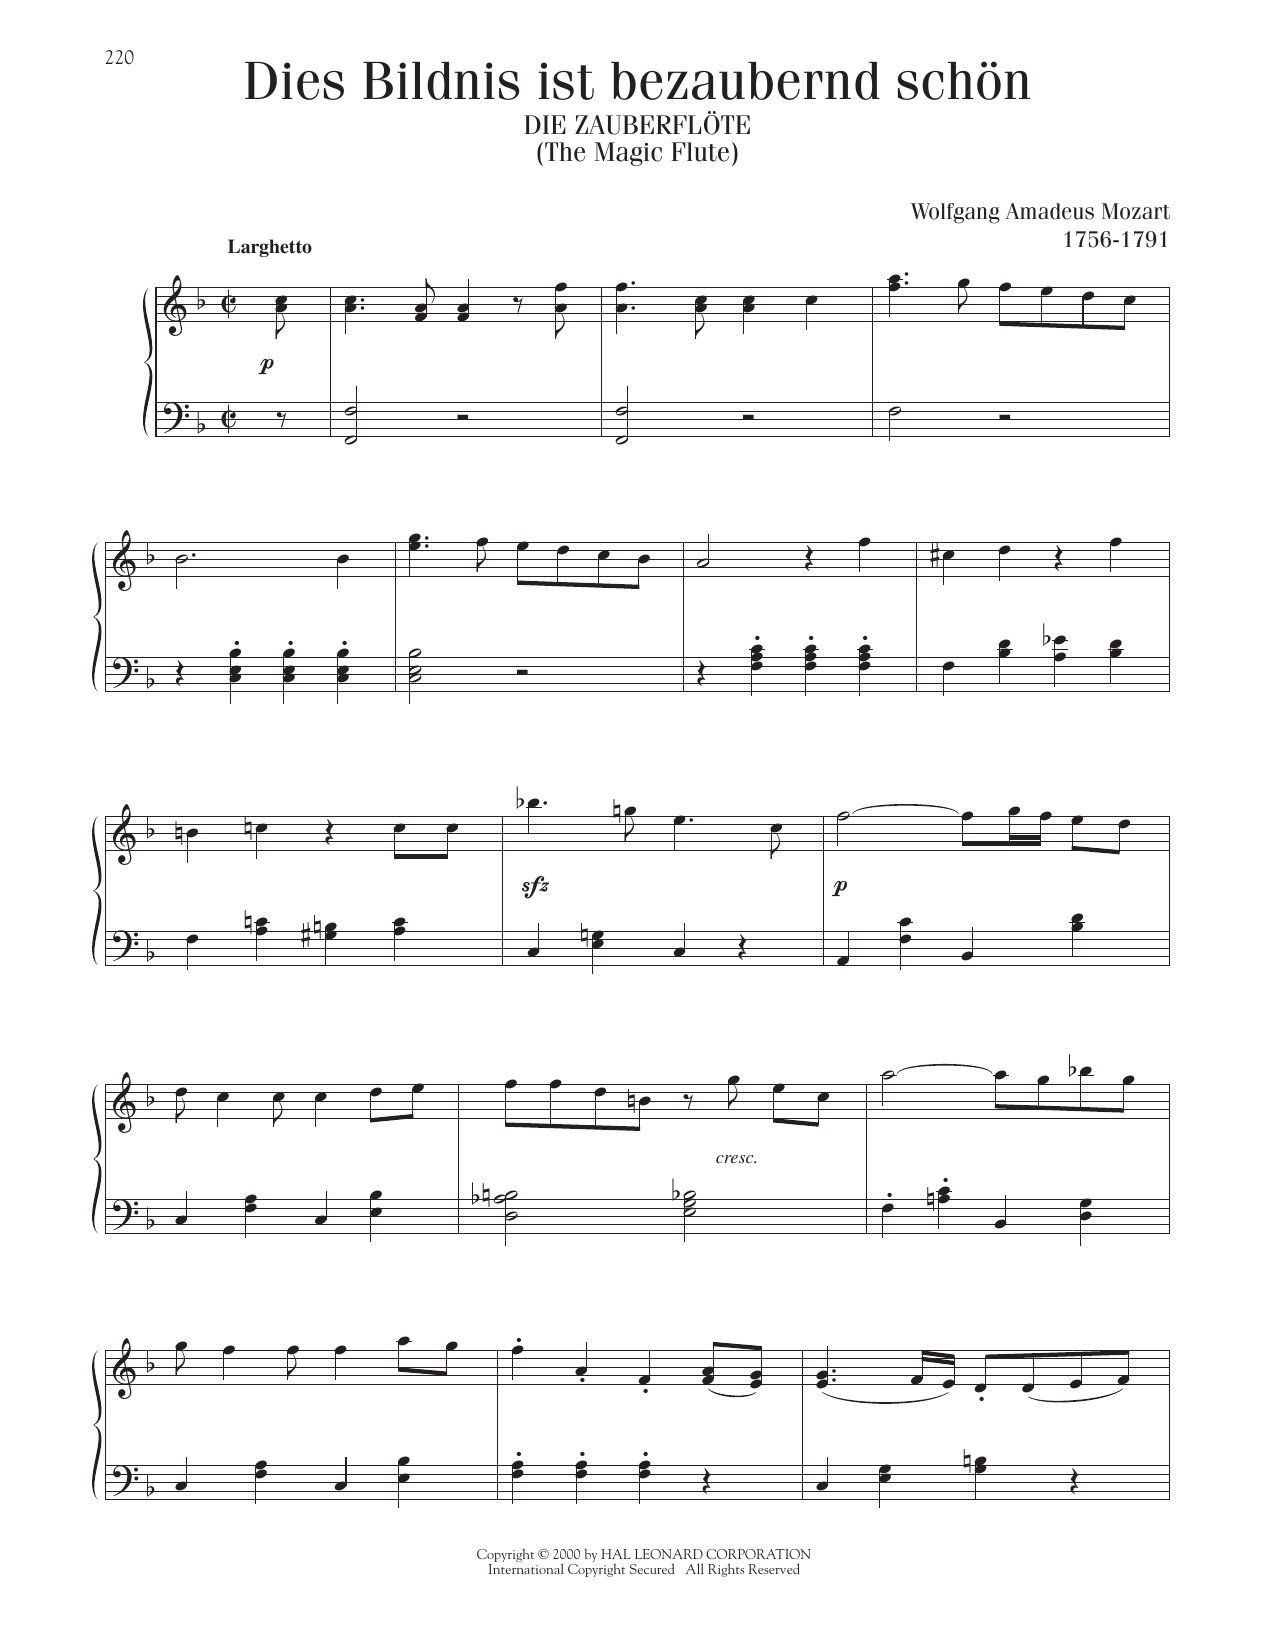 Wolfgang Amadeus Mozart Dies Bildnis Ist Bezaubernd Schon sheet music notes printable PDF score